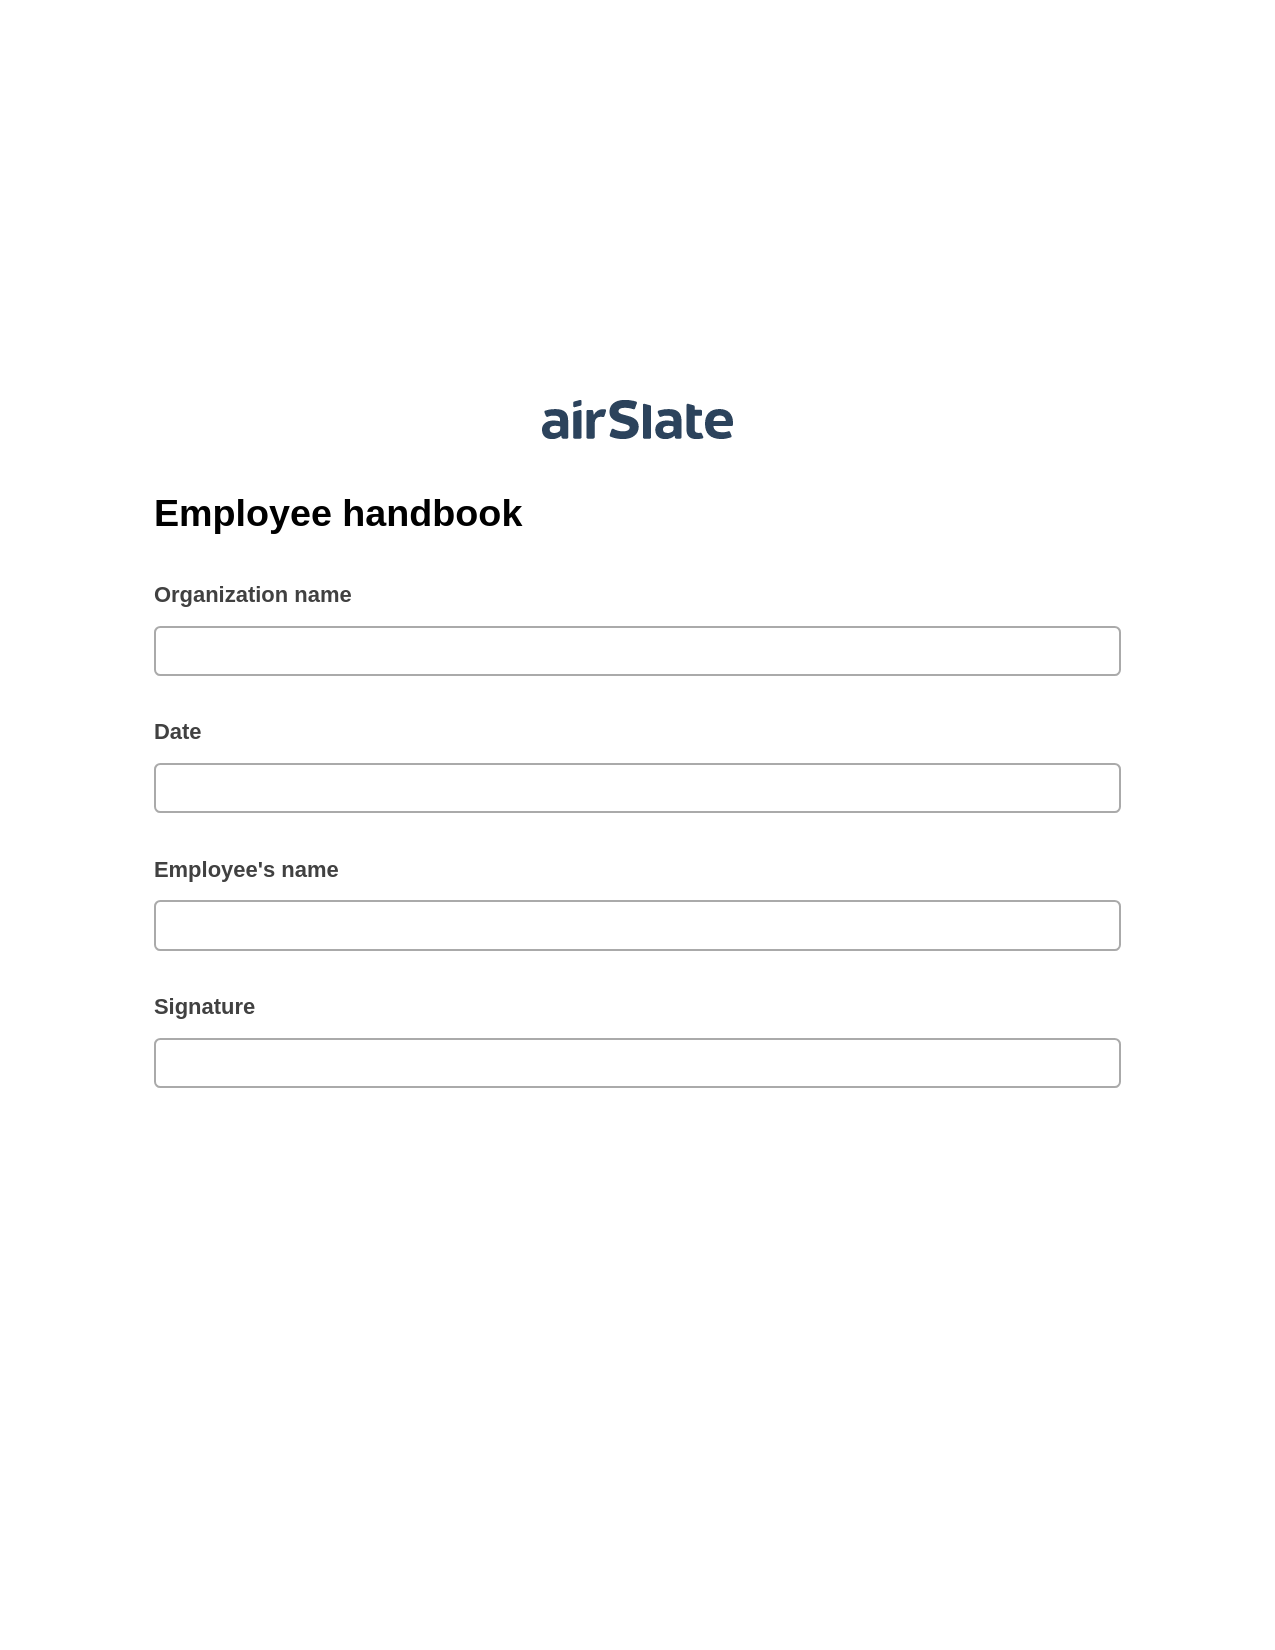 Employee handbook Pre-fill from Office 365 Excel Bot, Slack Notification Bot, Webhook Postfinish Bot